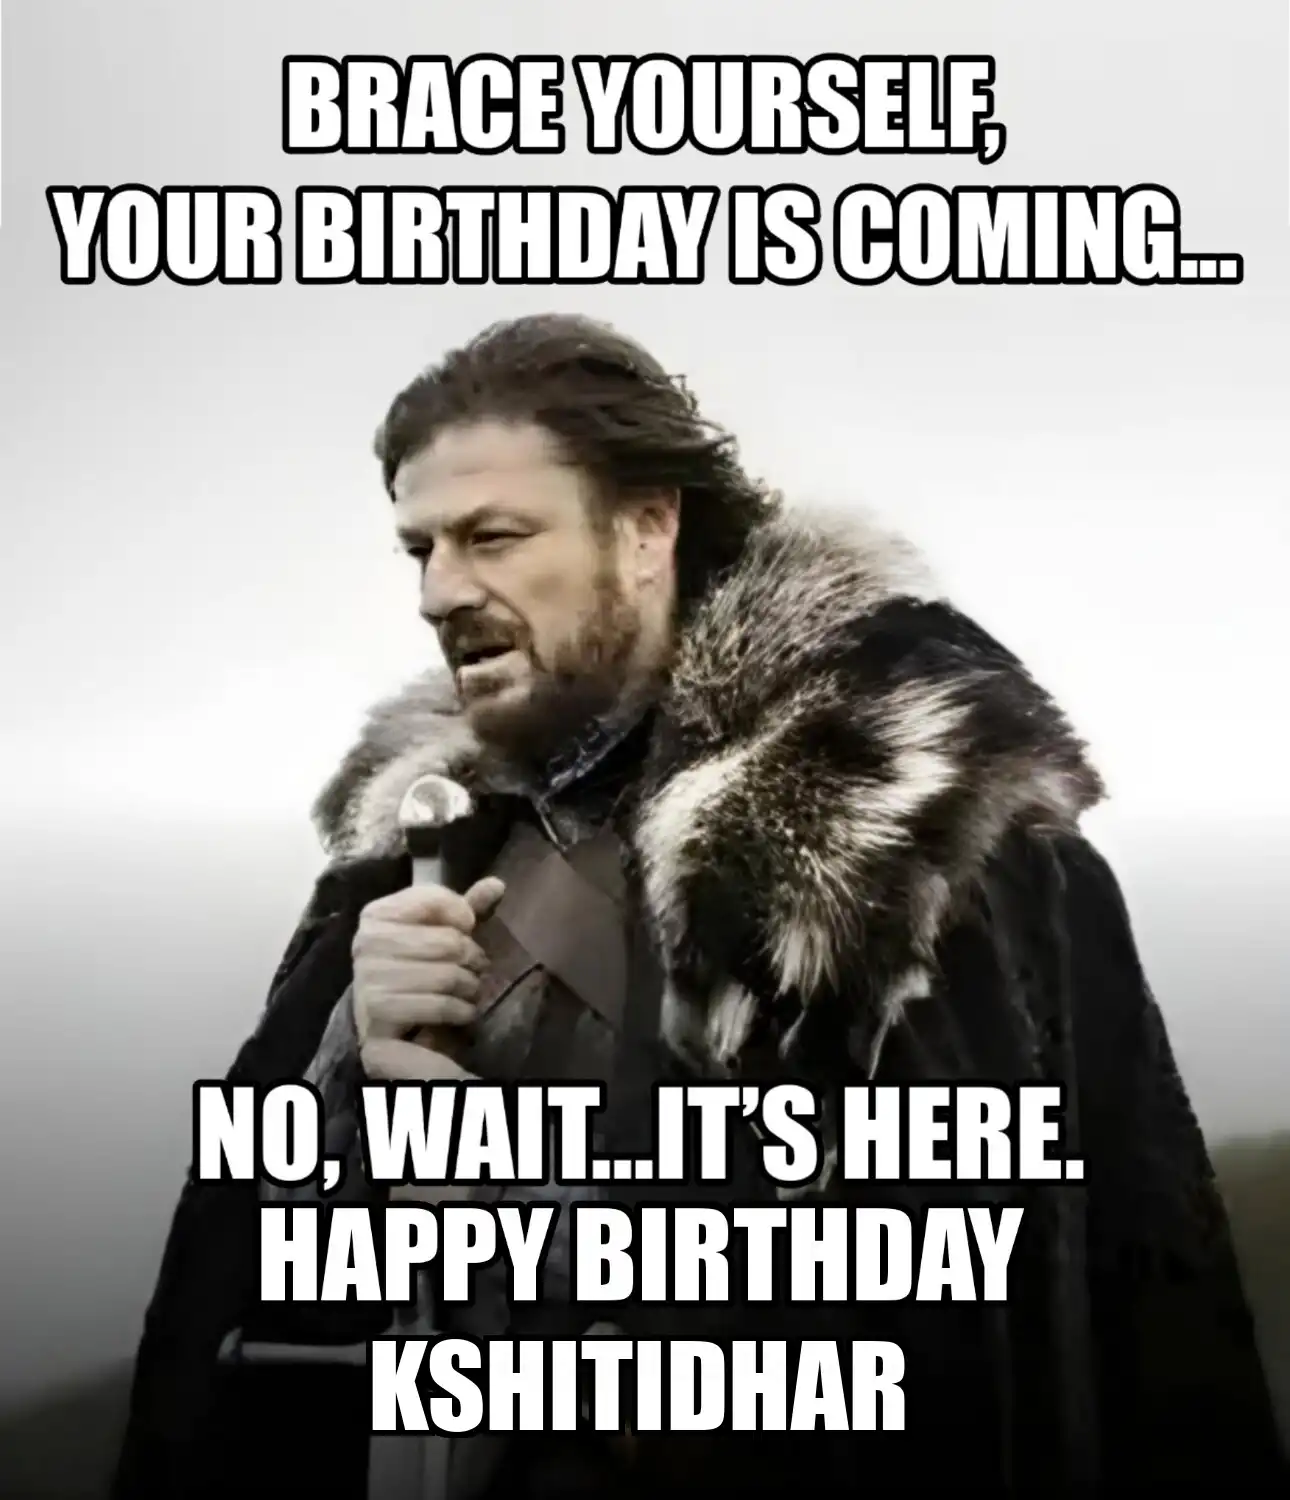 Happy Birthday Kshitidhar Brace Yourself Your Birthday Is Coming Meme